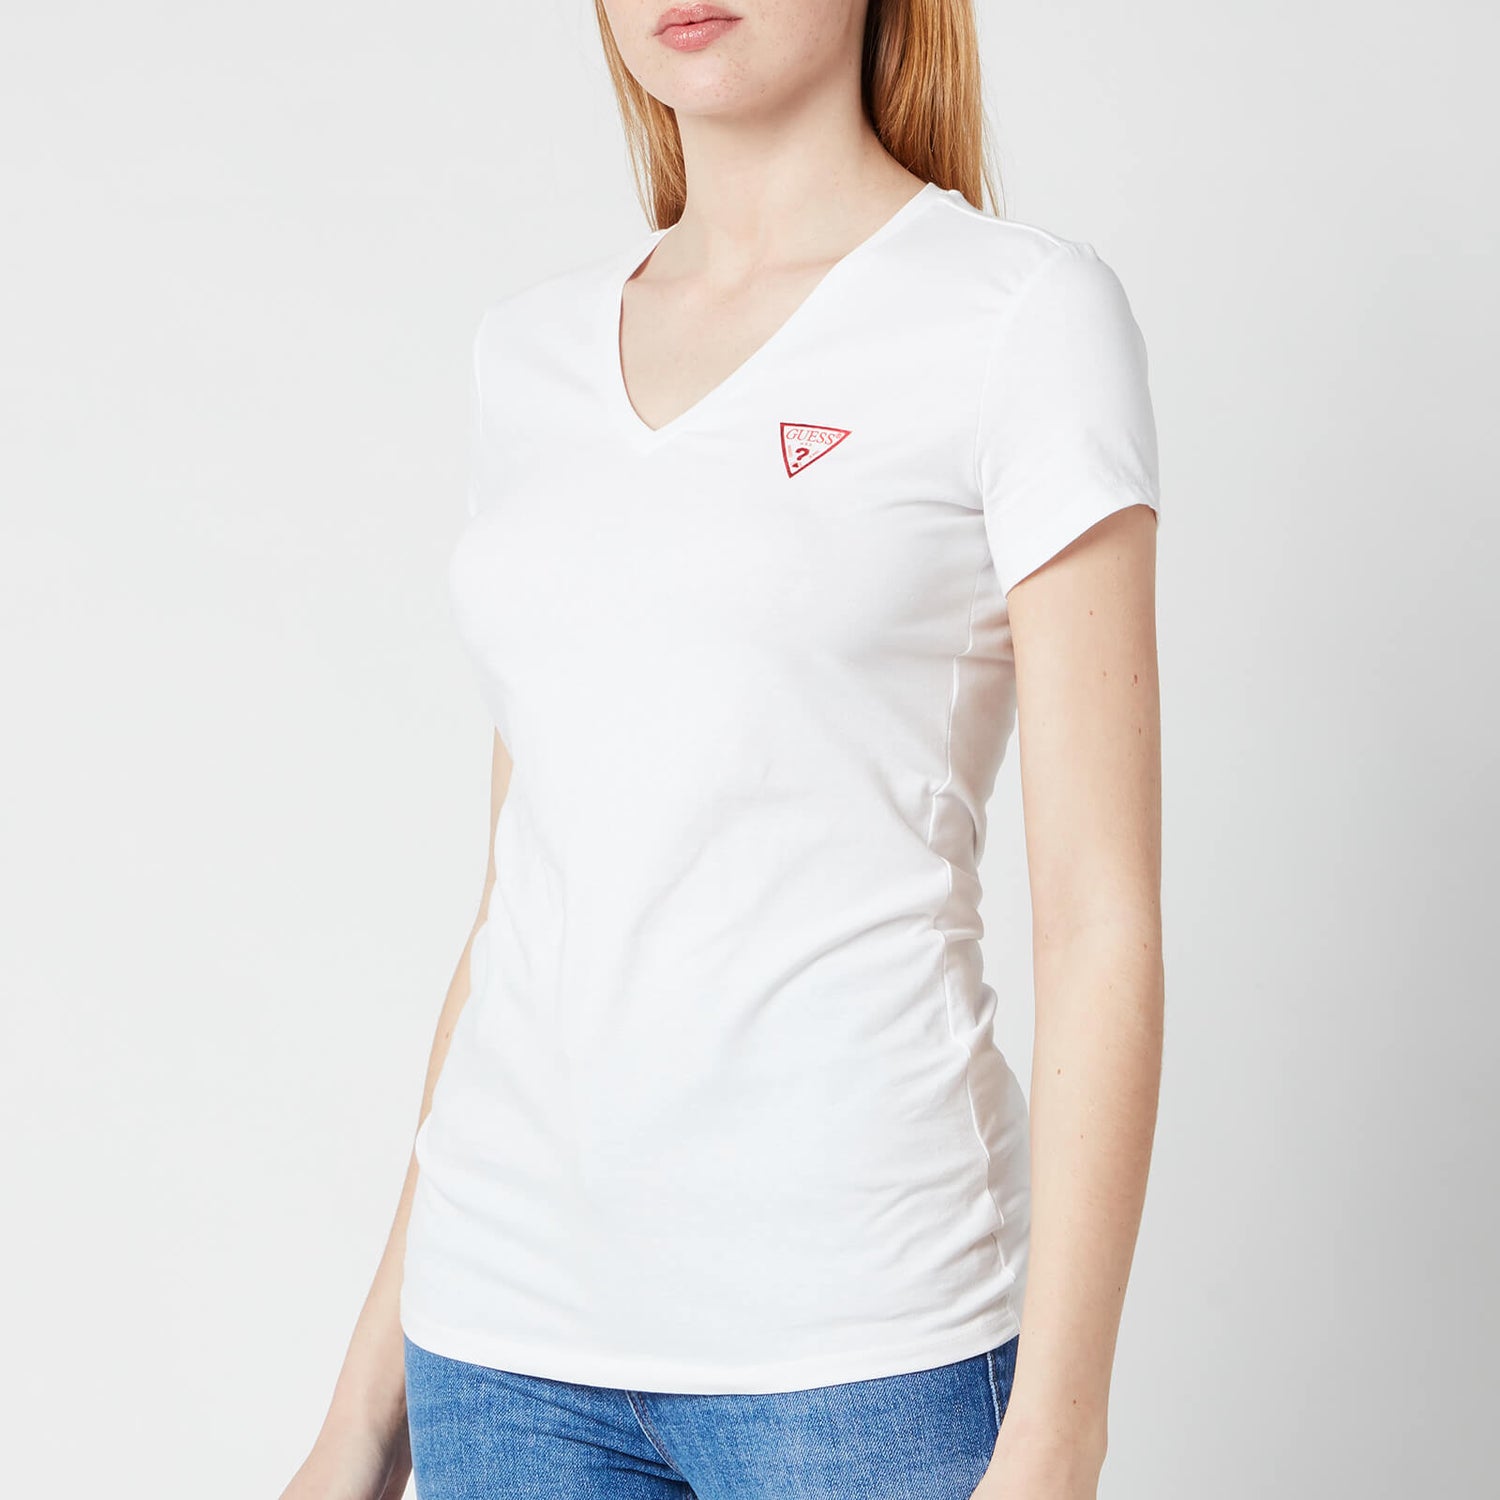 Guess Women's Short Sleeve Vn Mini Triangle T-Shirt - True White